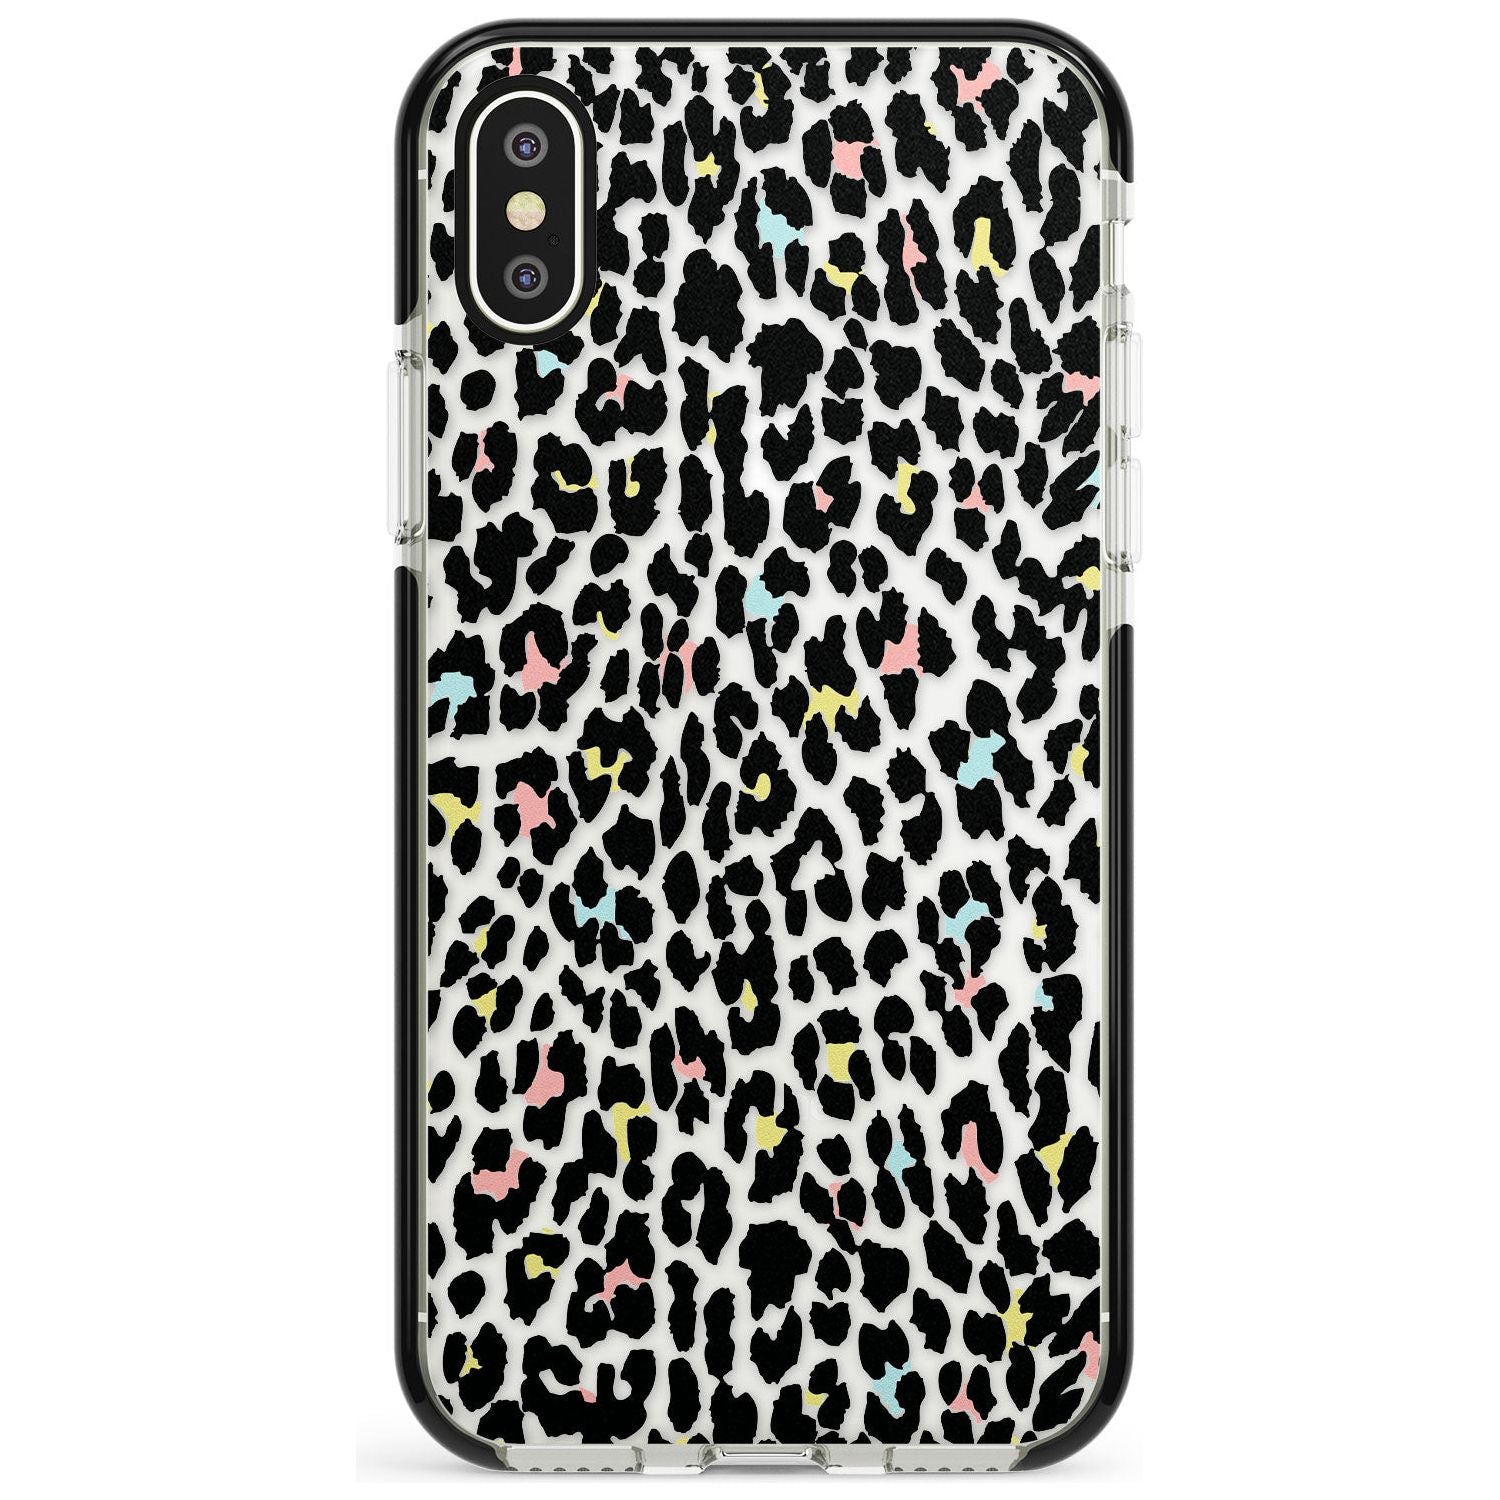 Mixed Pastels Leopard Print - Transparent Black Impact Phone Case for iPhone X XS Max XR